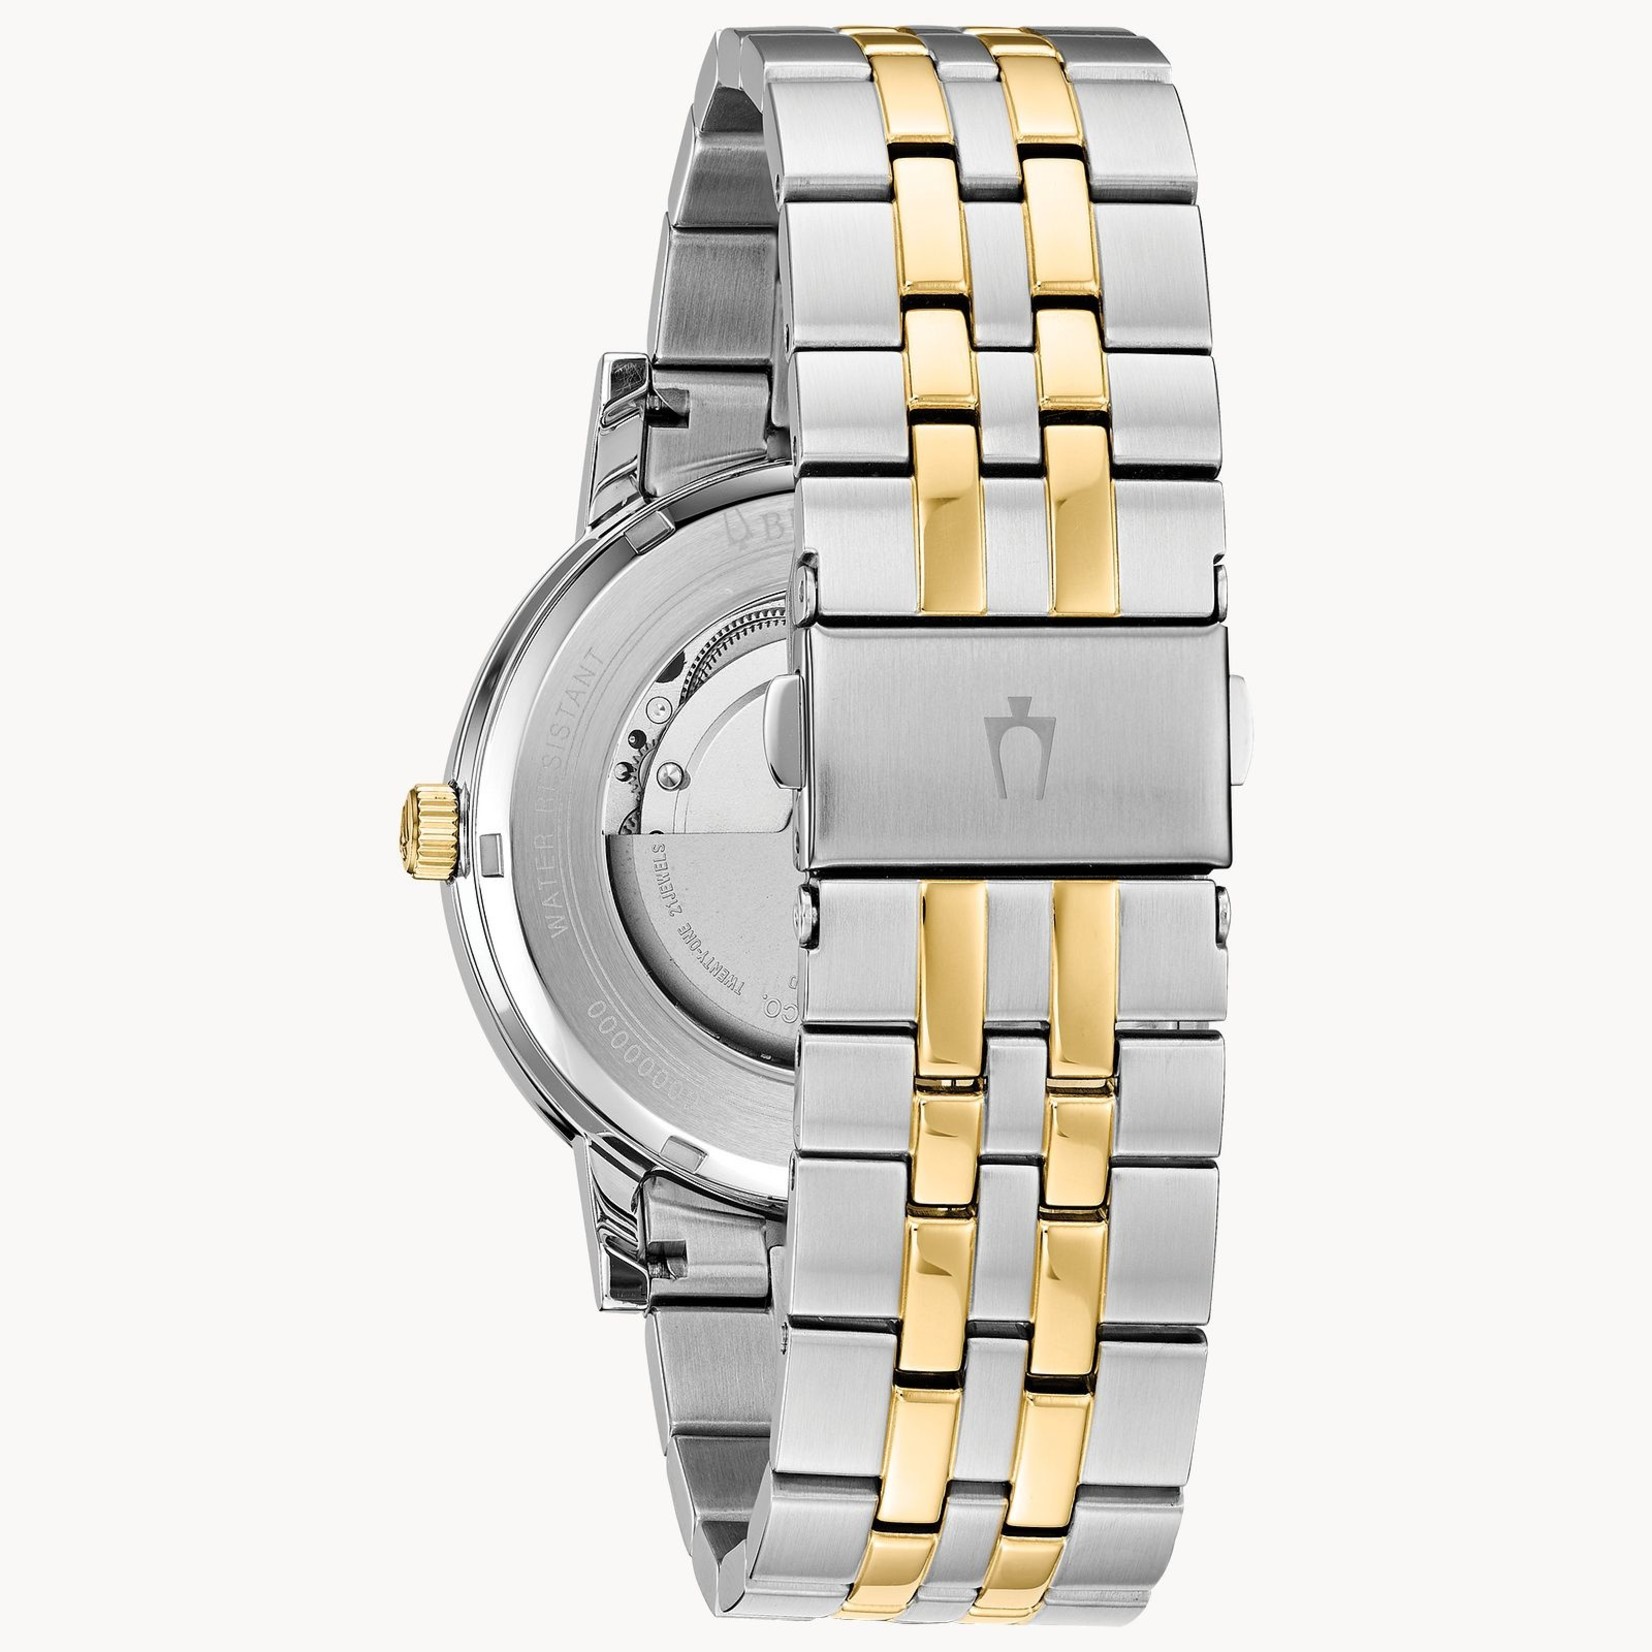 Bulova American Clipper -Men's SS WG/YG Automatic Watch